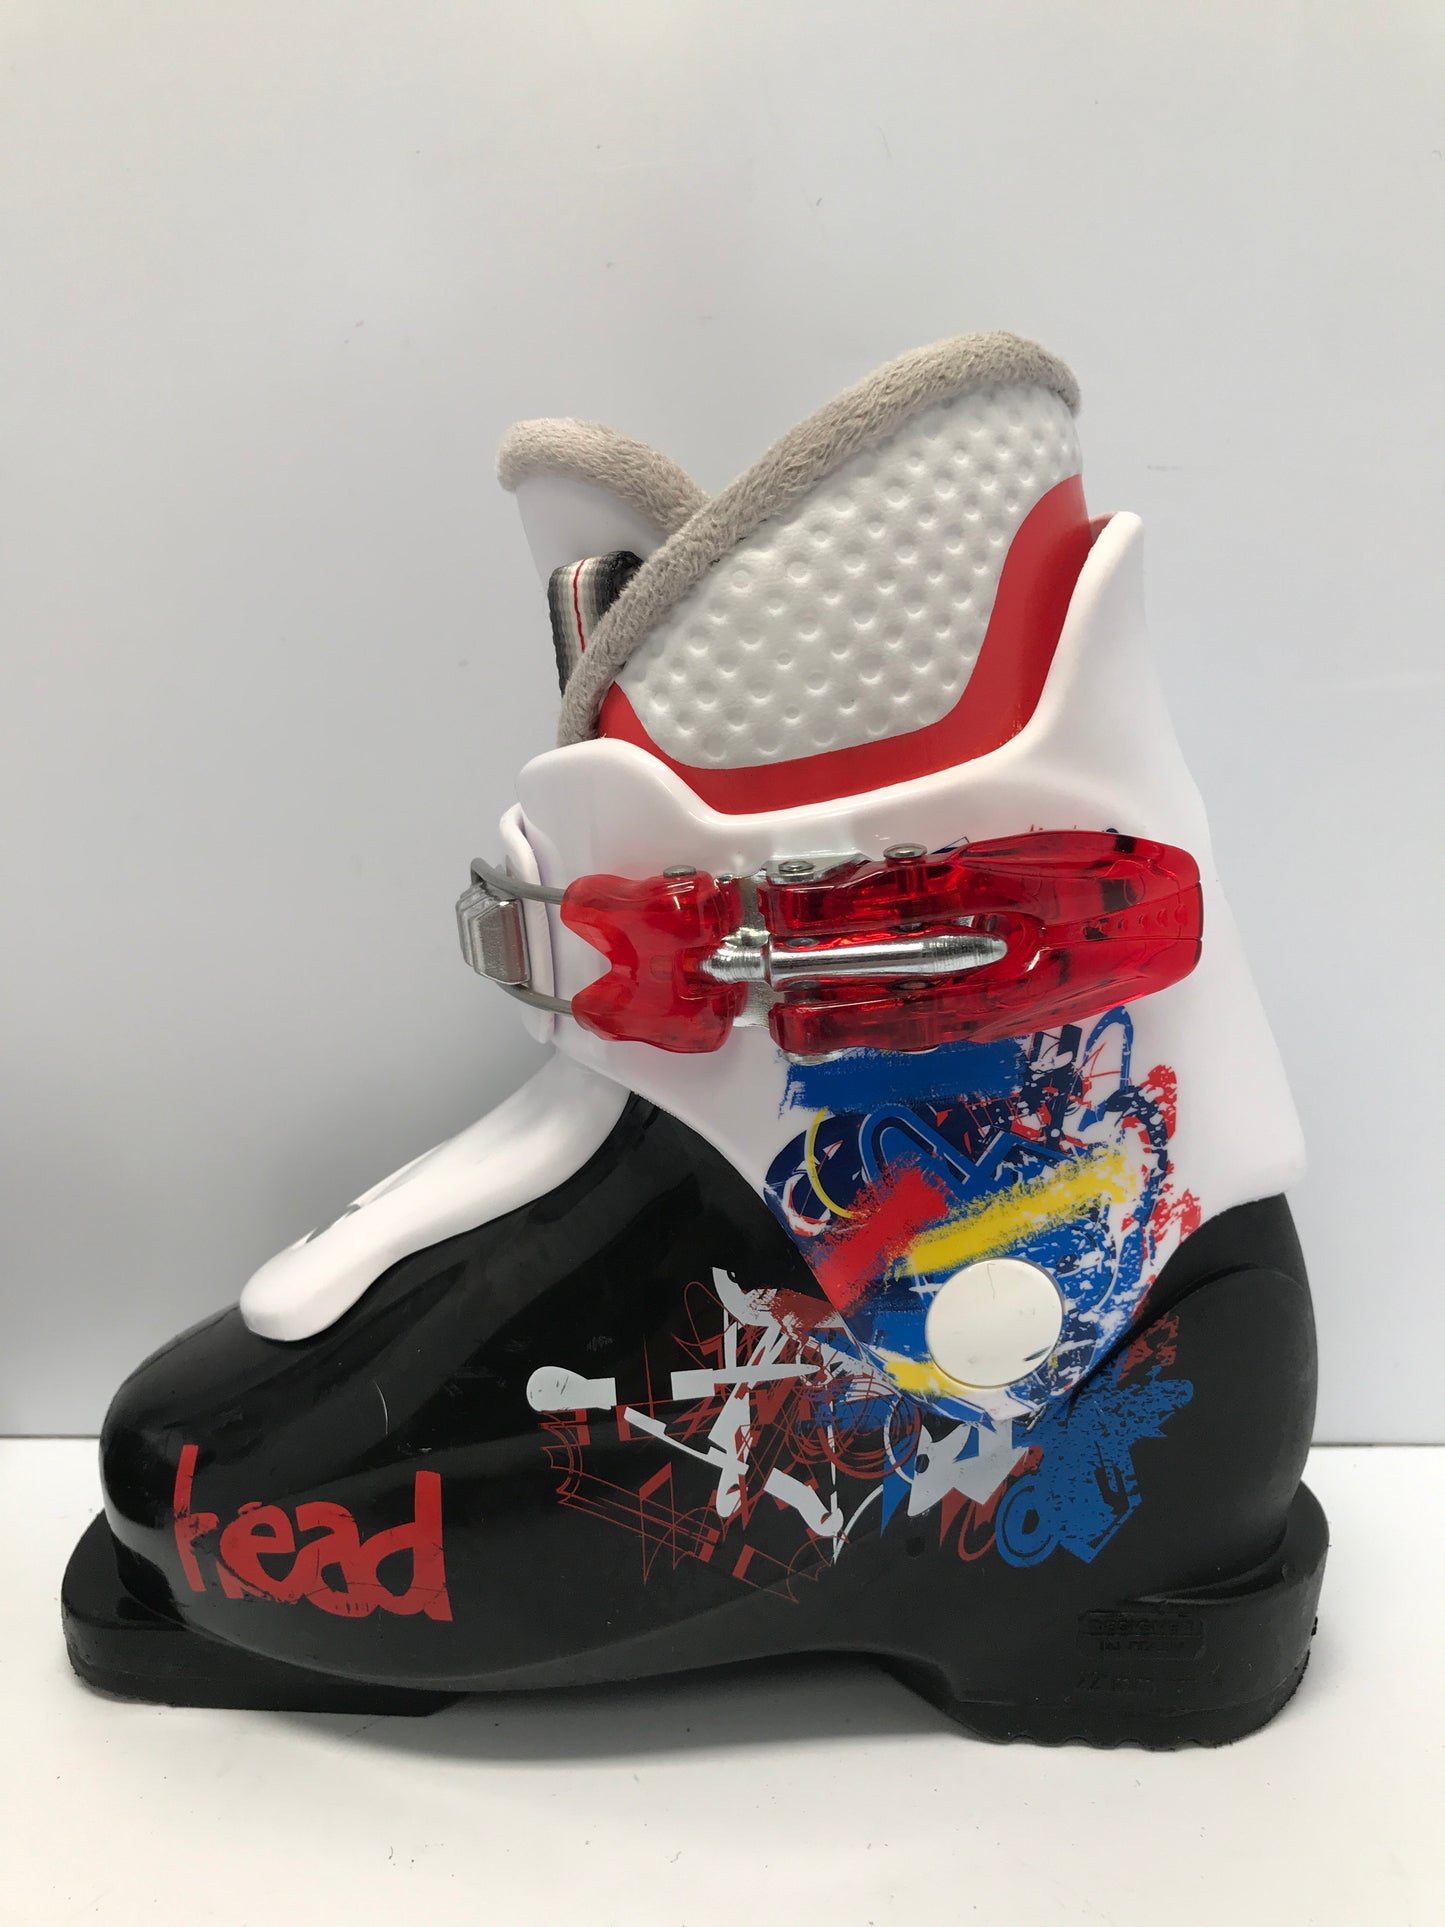 Ski Boots Mondo Size 17.0-18.5 Child size 11-12 221 mm Head Black Red Blue White Like New